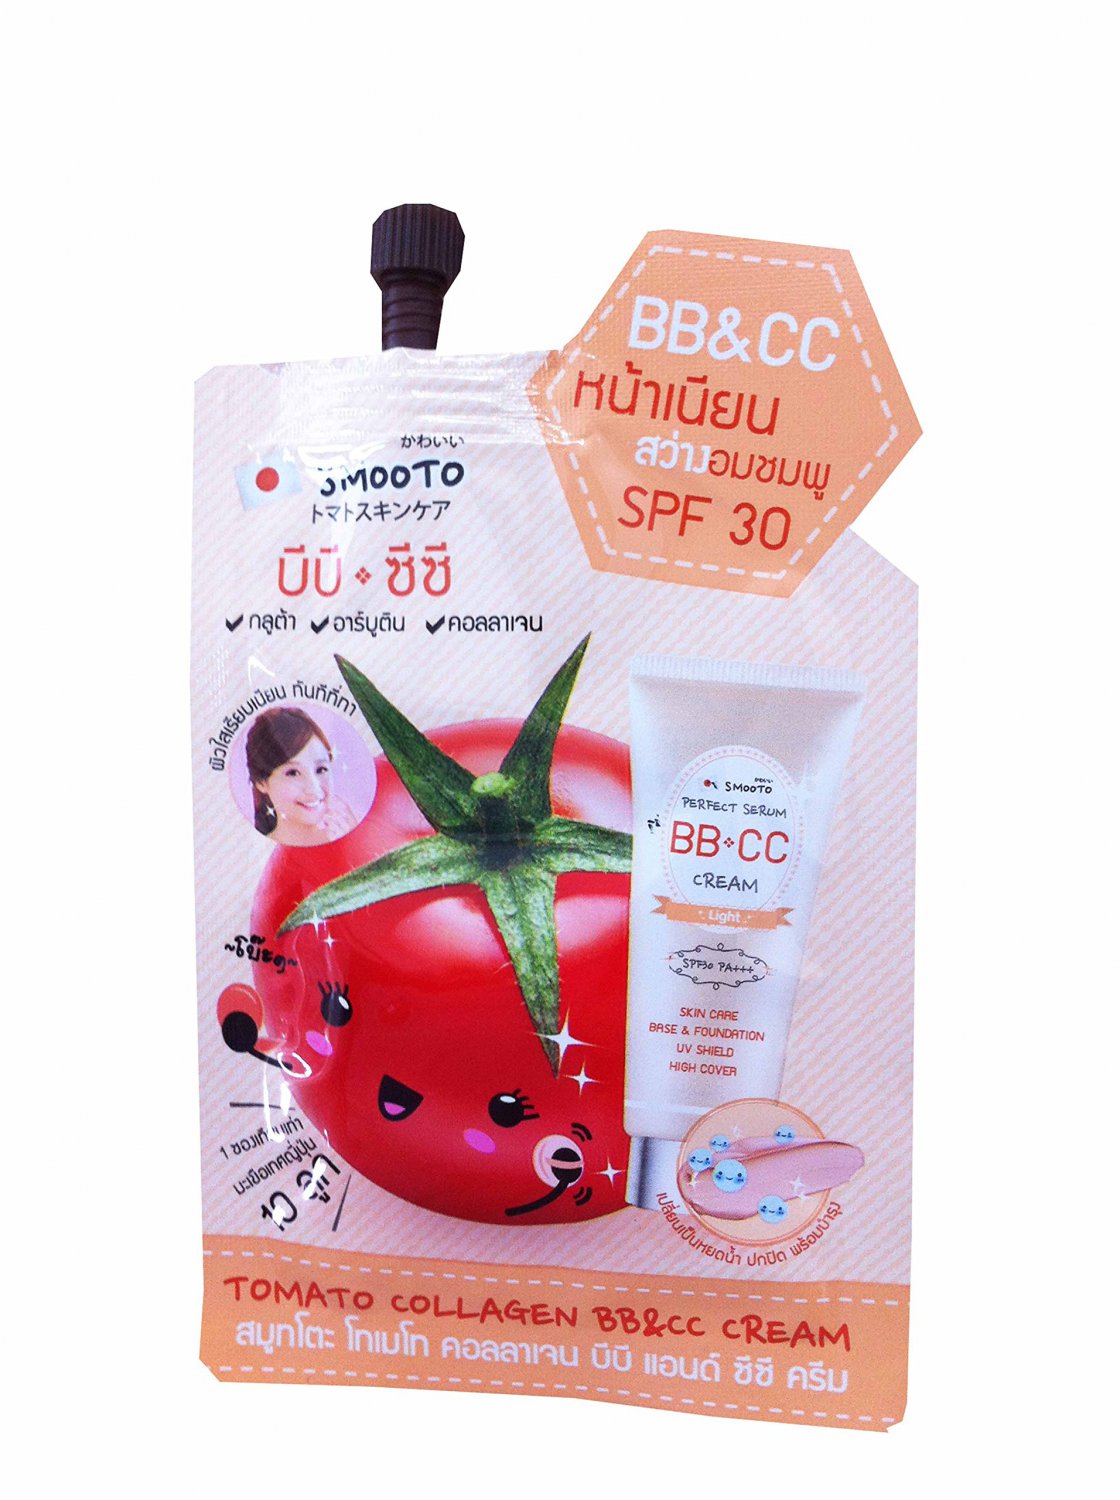 3 Packets of Smooto Tomato Collagen Spf 30 Bb & Cc Cream. (10